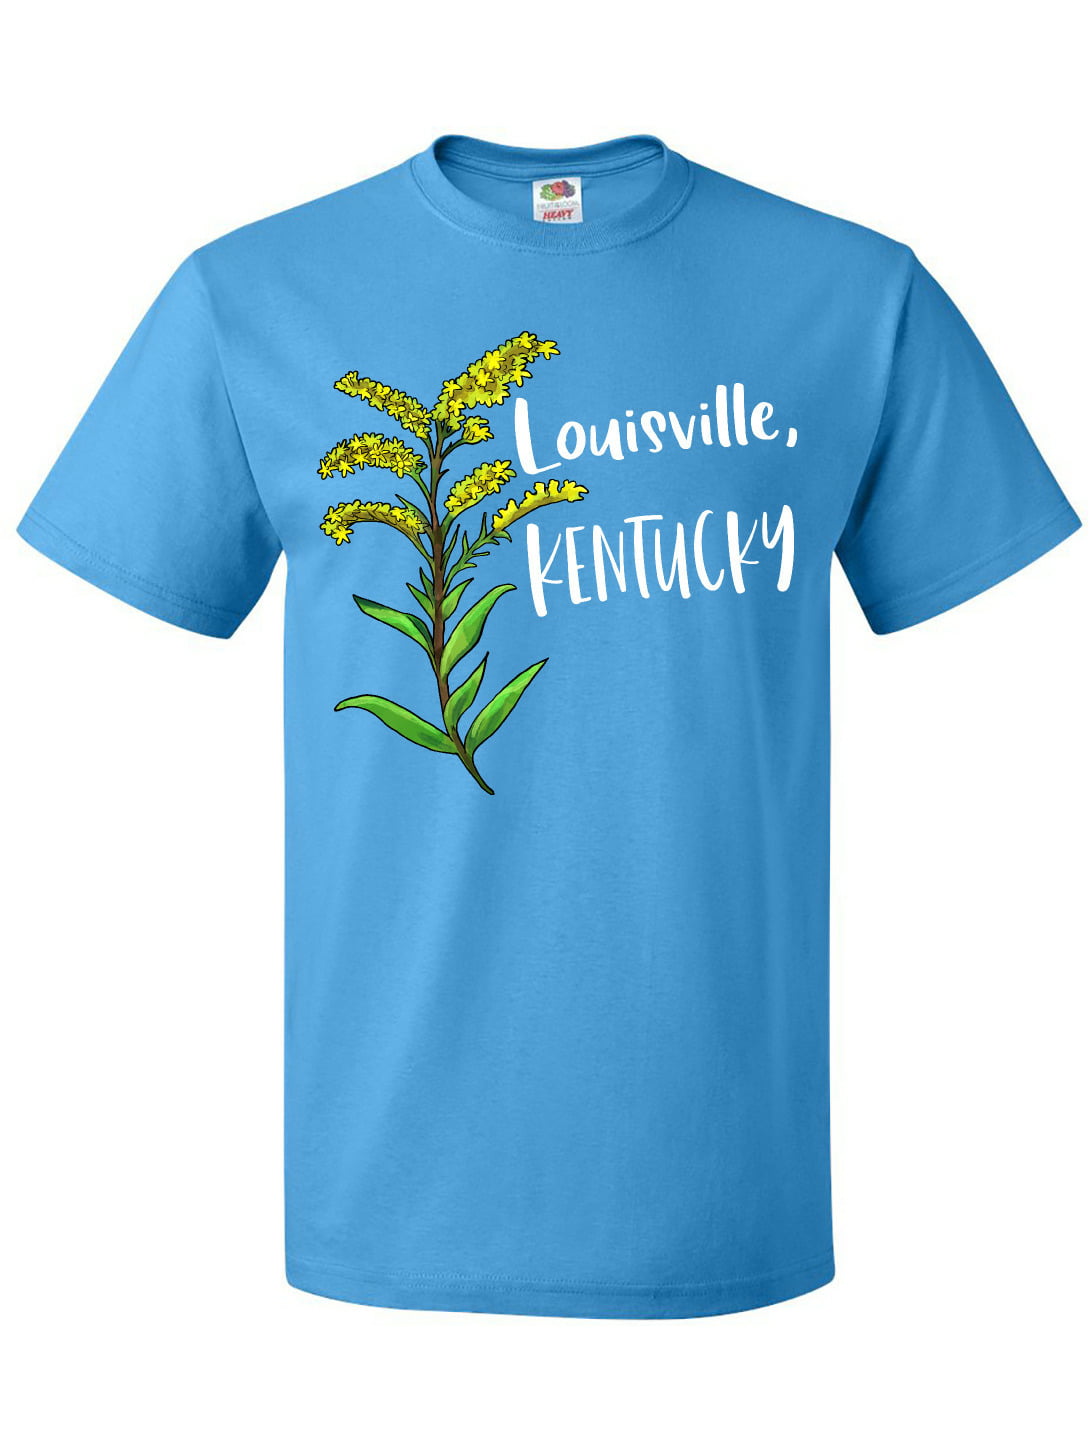 University of Louisville Cardinals Disney Youth Short Sleeve T-Shirt | Blue 84 | Red | Youth Medium